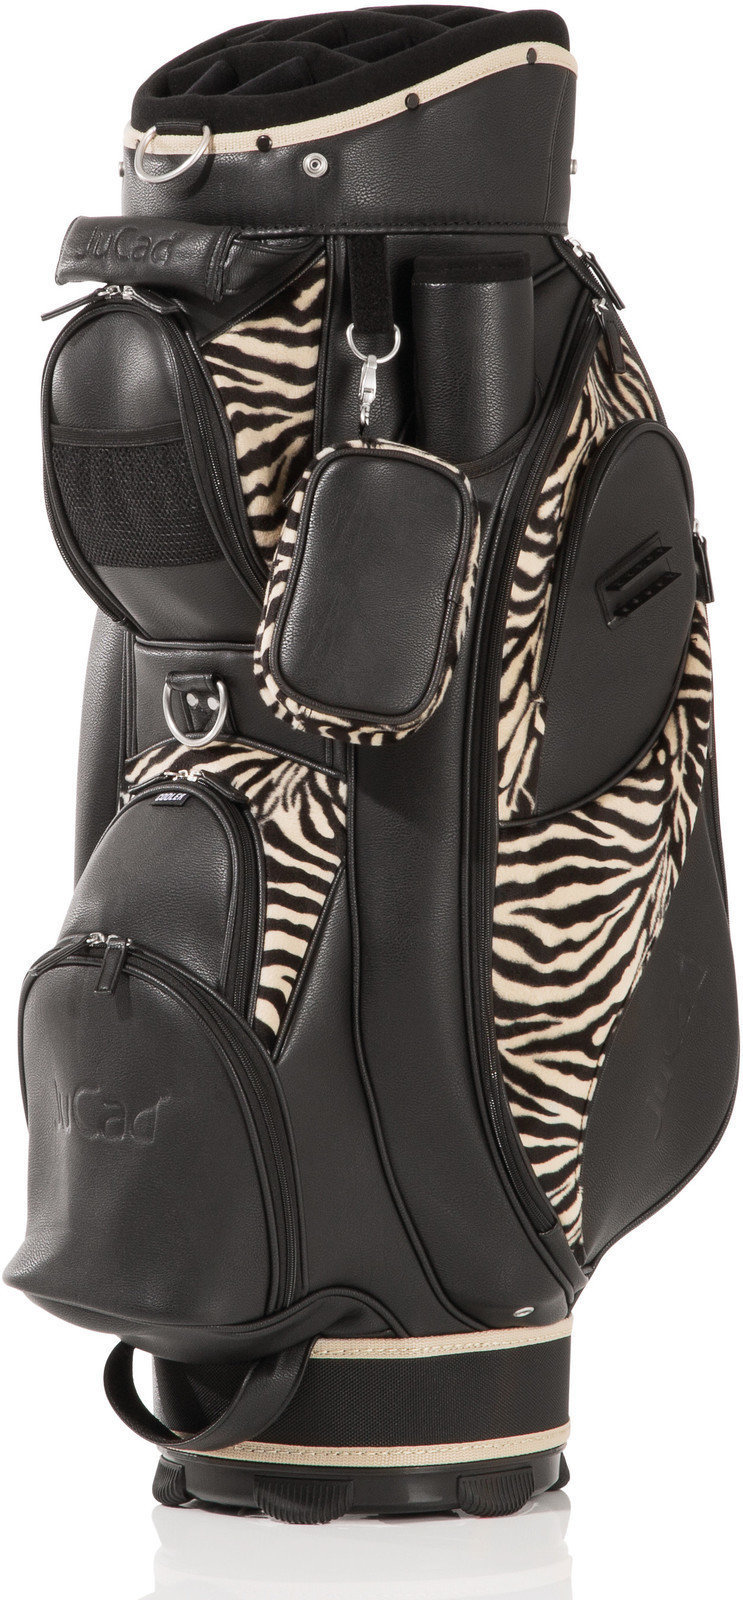 Sac de golf Jucad Style Black/Zebra Cart Bag